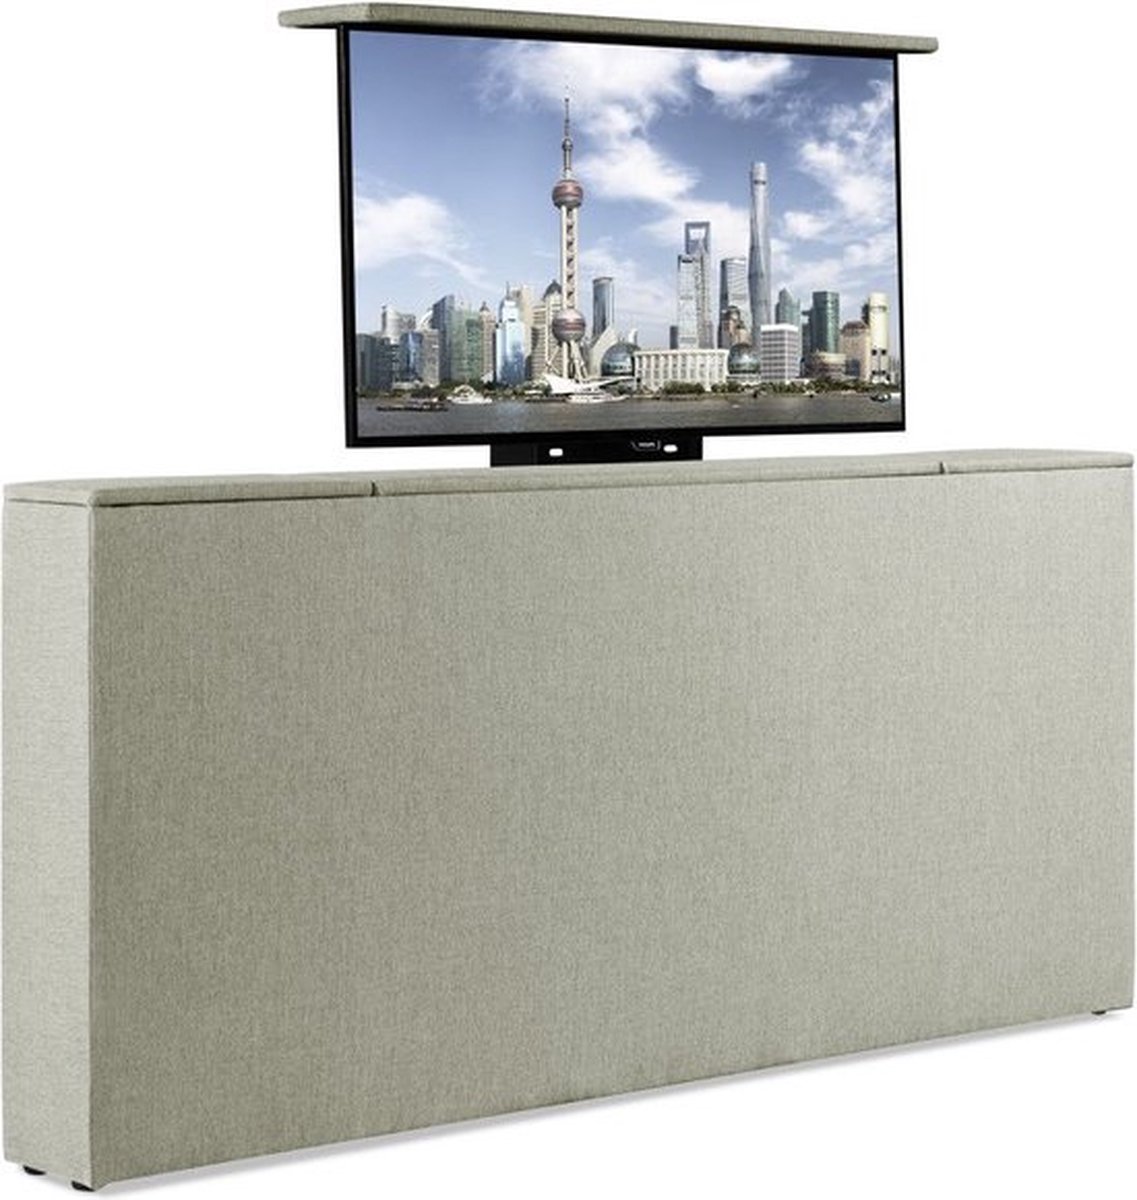 Bedonderdeel - BedNL TV-Lift Systeem in Voetbord - Max. 42 inch TV - 160 breed 85 Hoog 22 Breed- Groen Stof